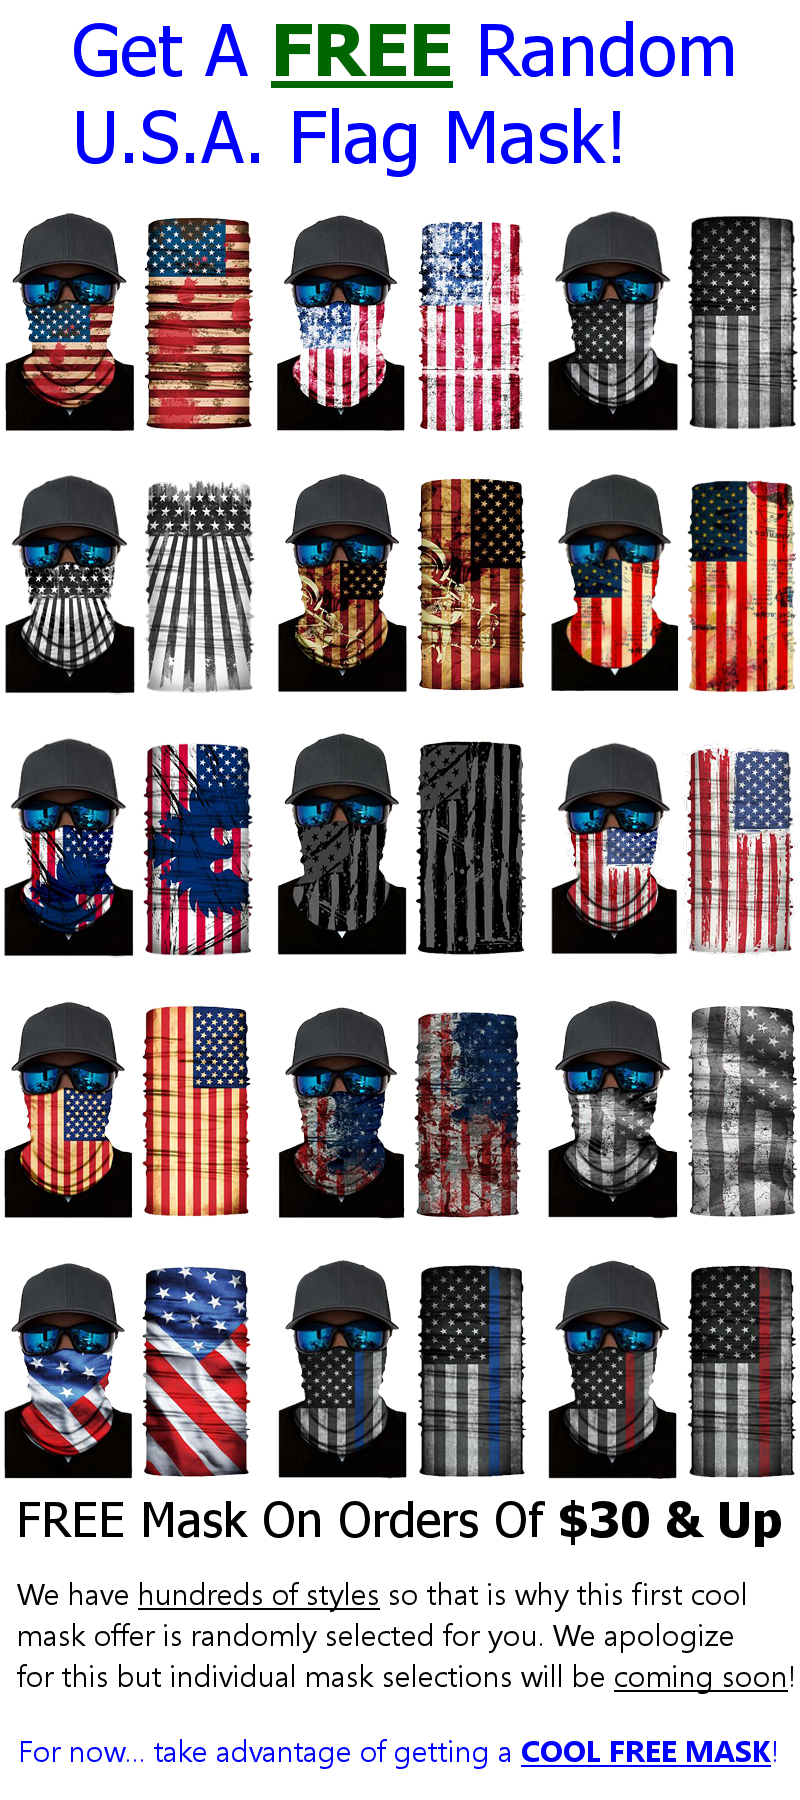 Free Cool, High Quality USA Flag Microfiber Face Mask!